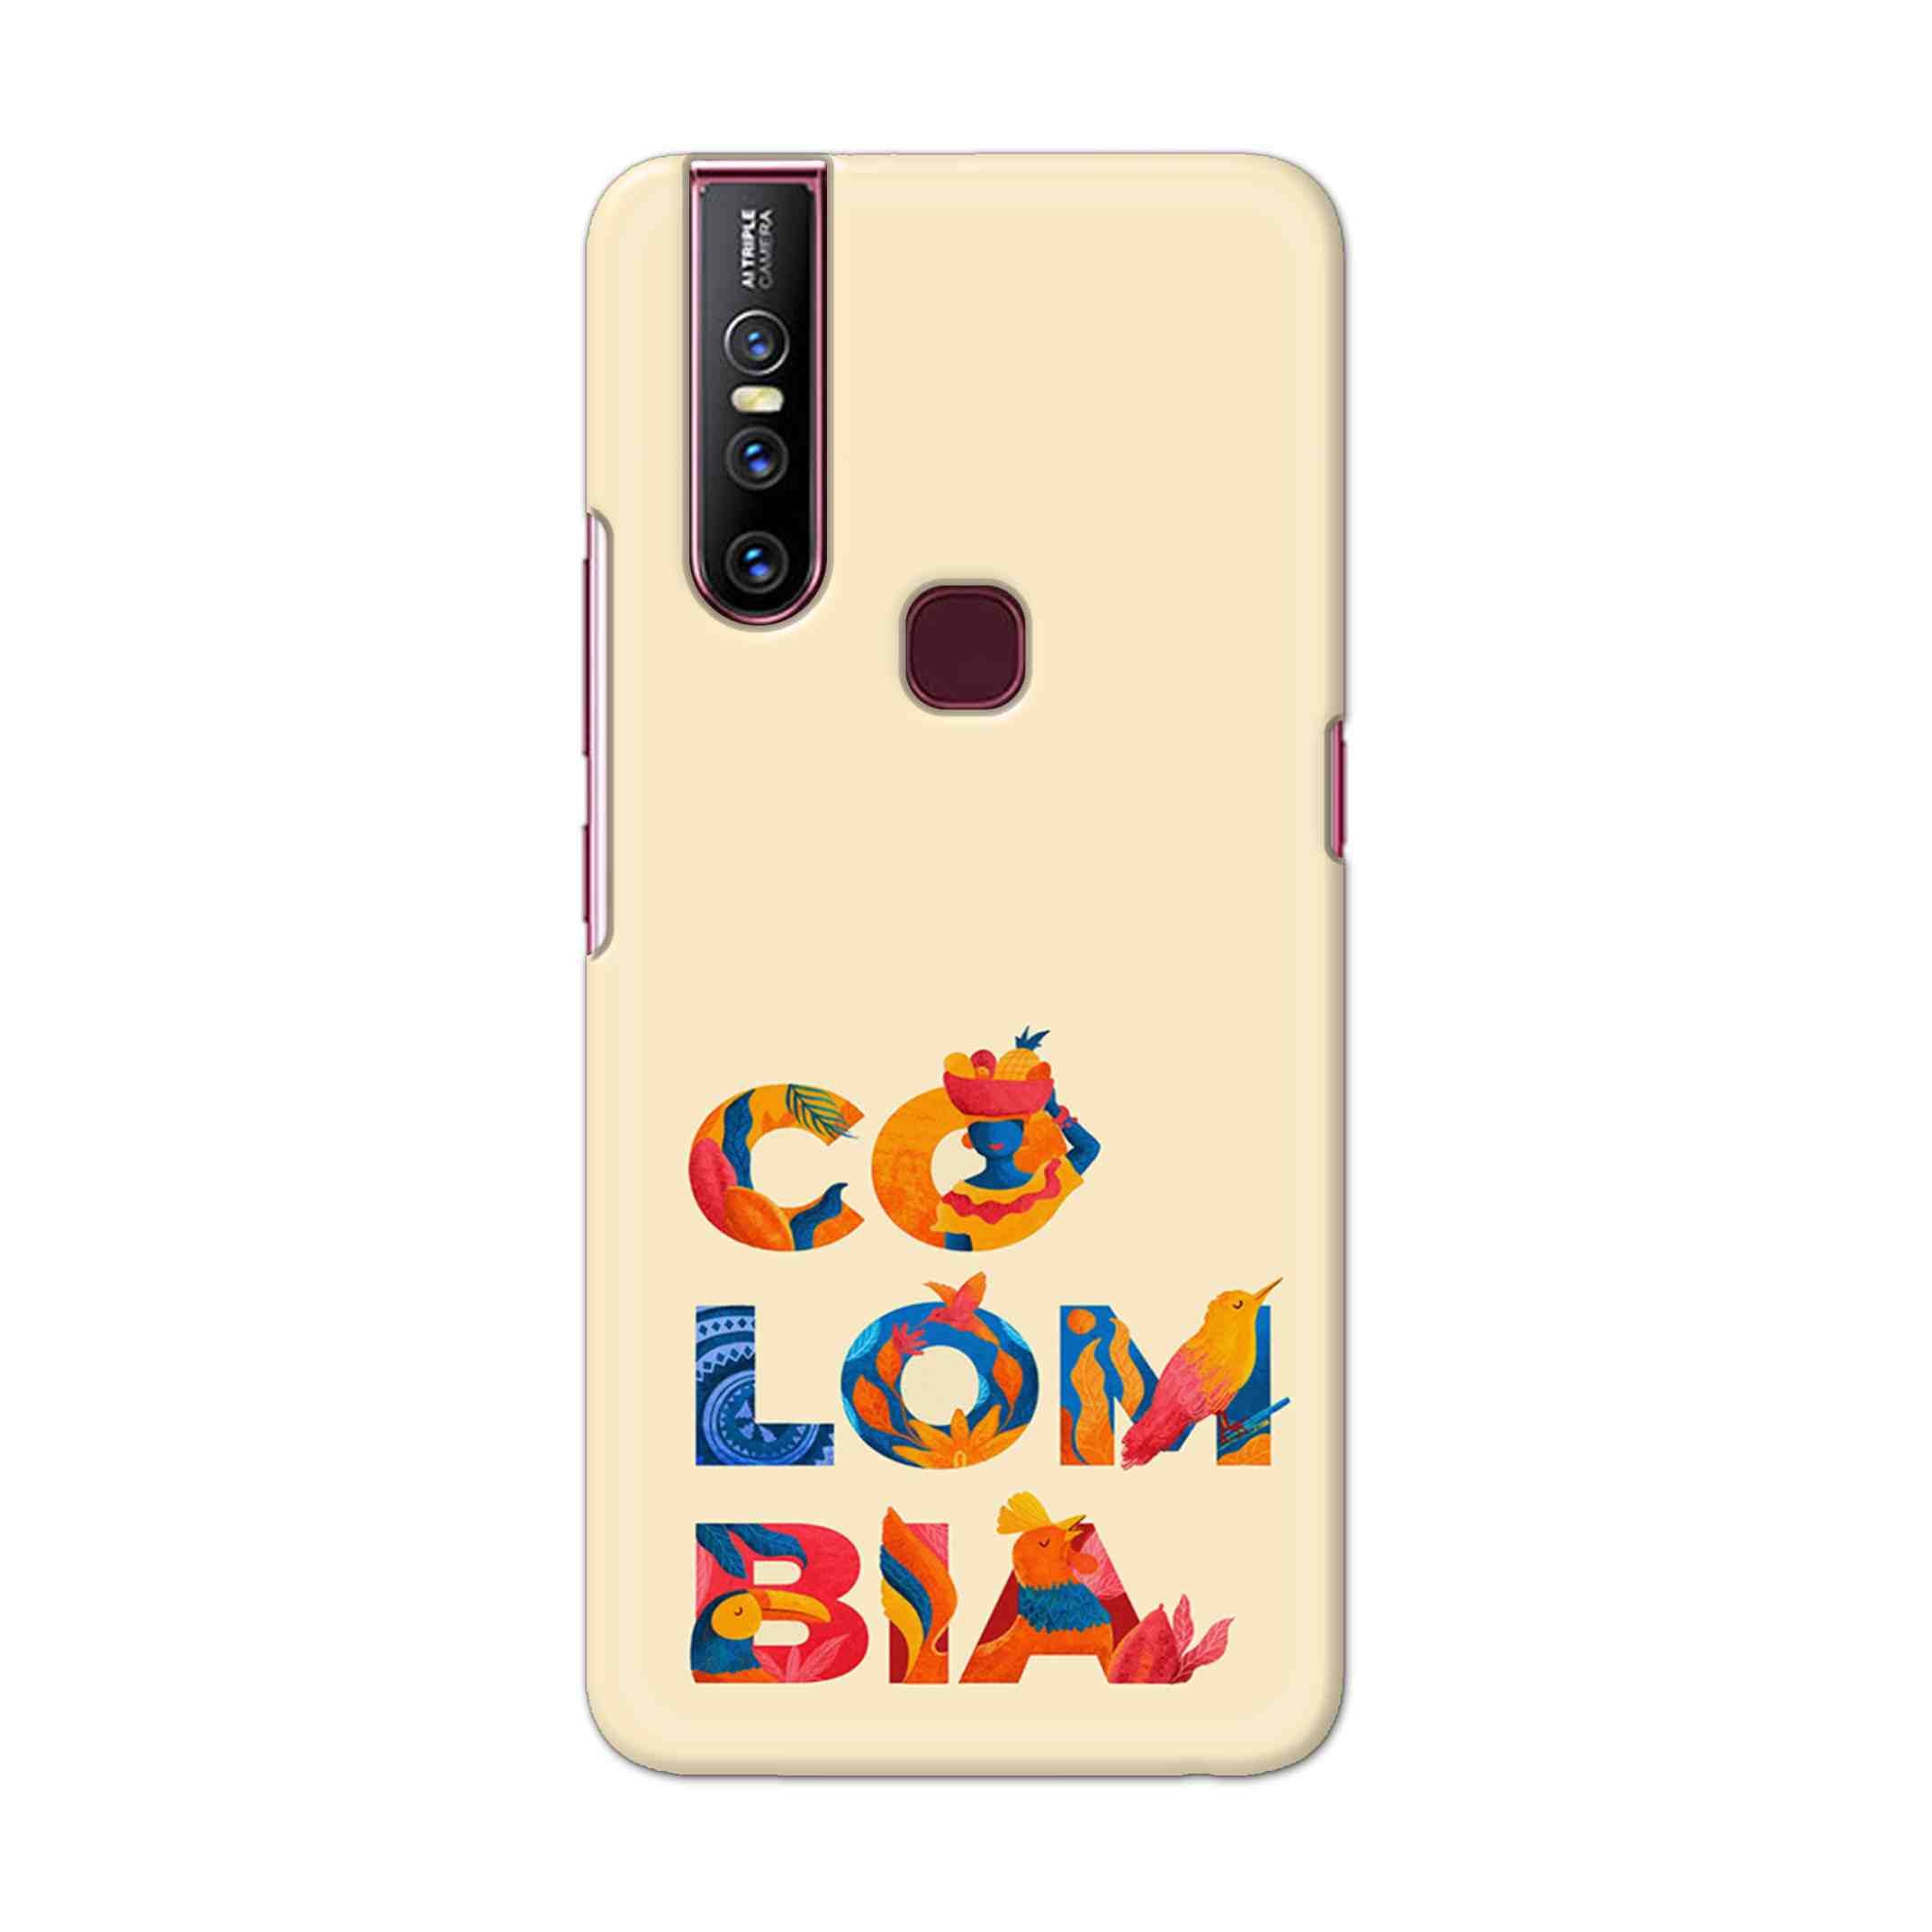 Buy Colombia Hard Back Mobile Phone Case Cover For Vivo V15 Online